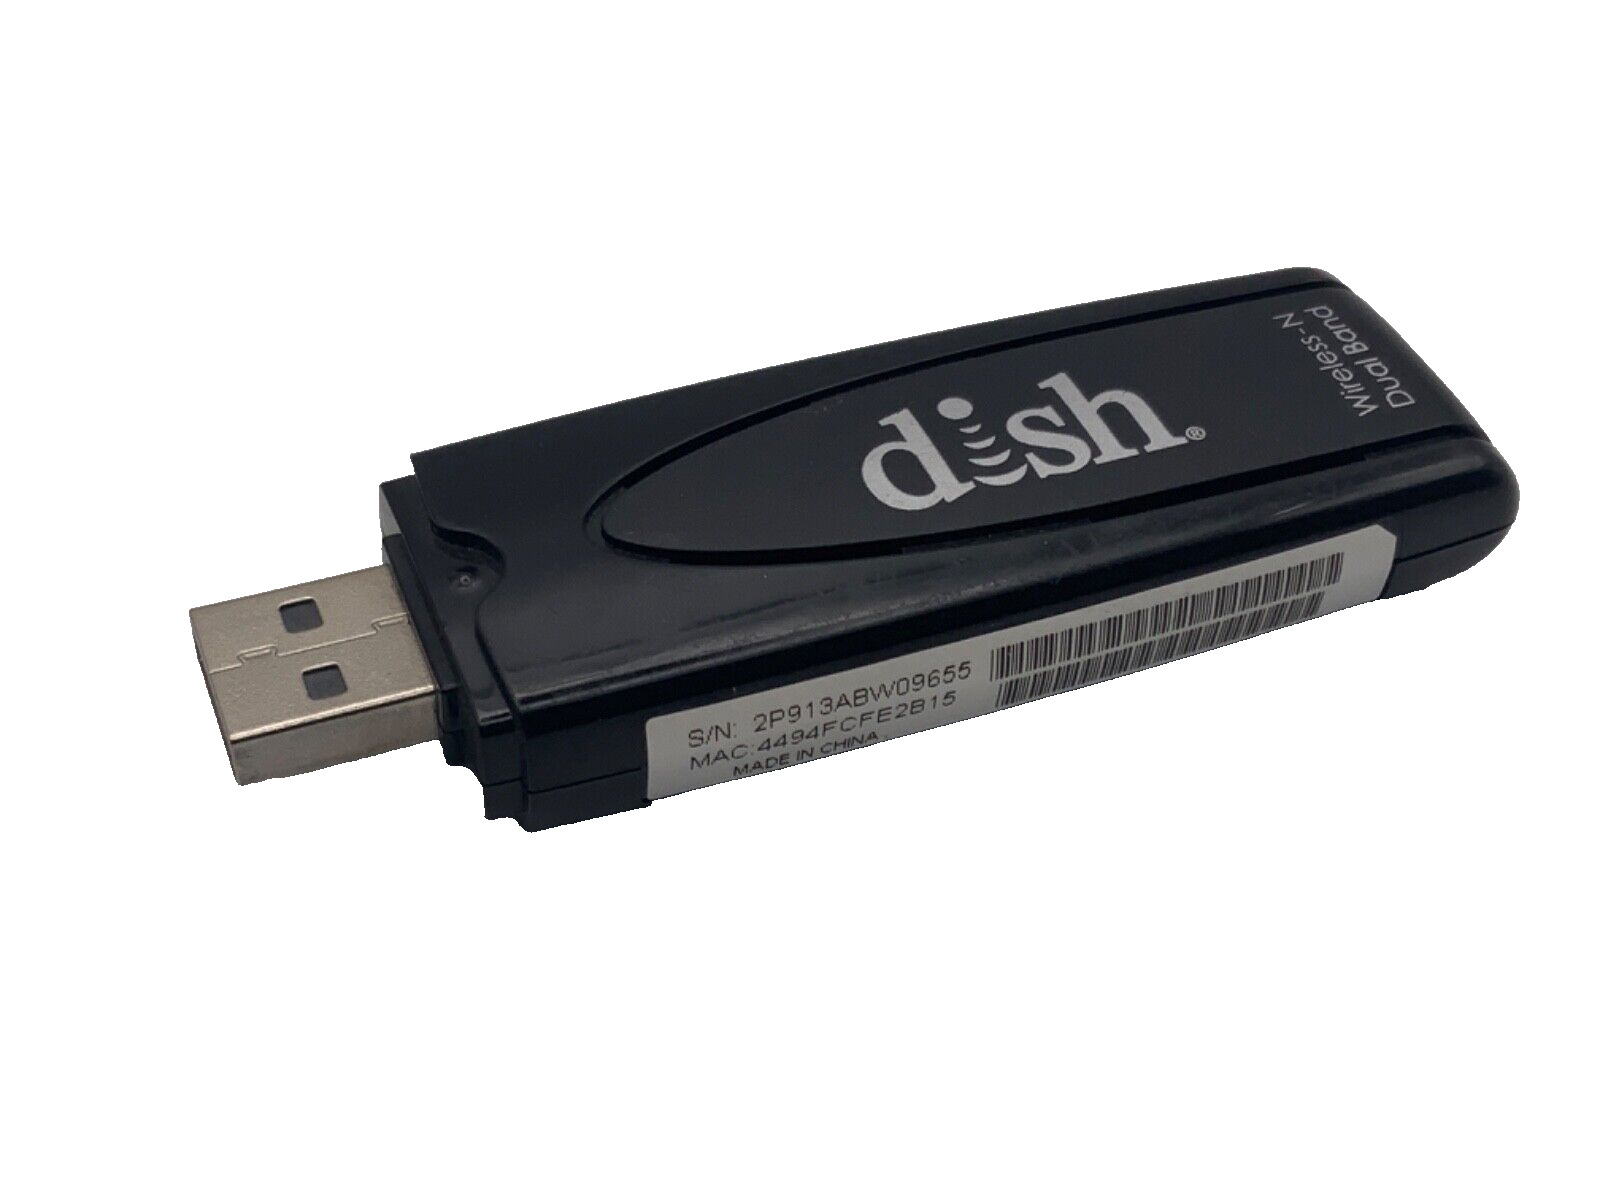 NETGEAR wifi USB Stick for Dish Network WNDA3100 v2 Wireless Adapter Pace